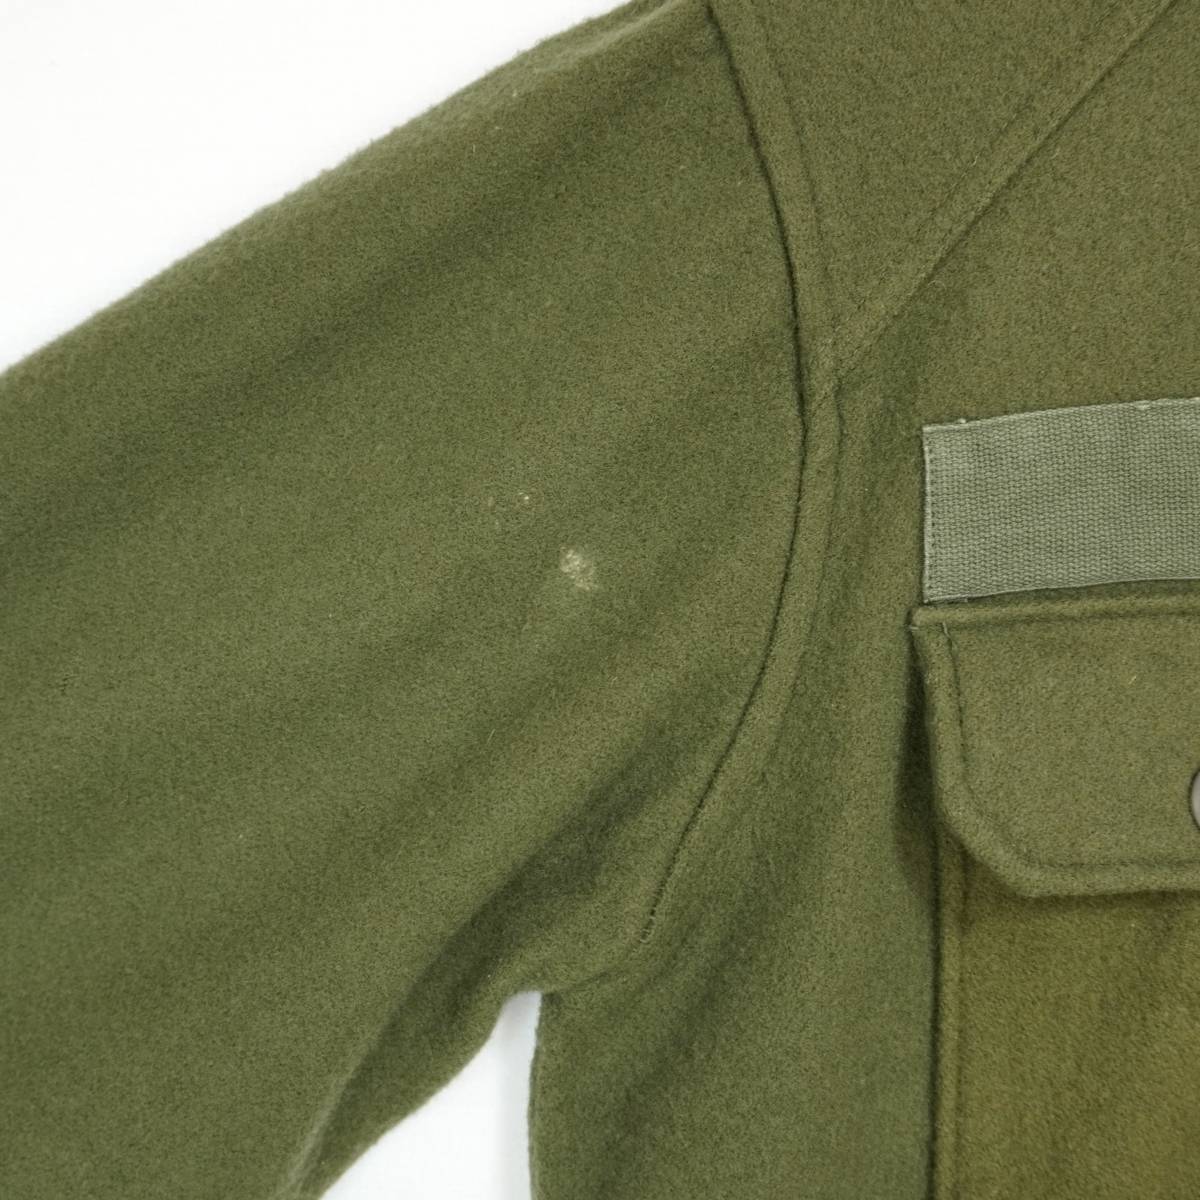 US ARMY OG-108 Wool Shirts 1982s MEDIUM SHIRT23195 Vintage アメリカ軍 ウールシャツ 1980年代 アメリカ製 ヴィンテージ 米軍実物